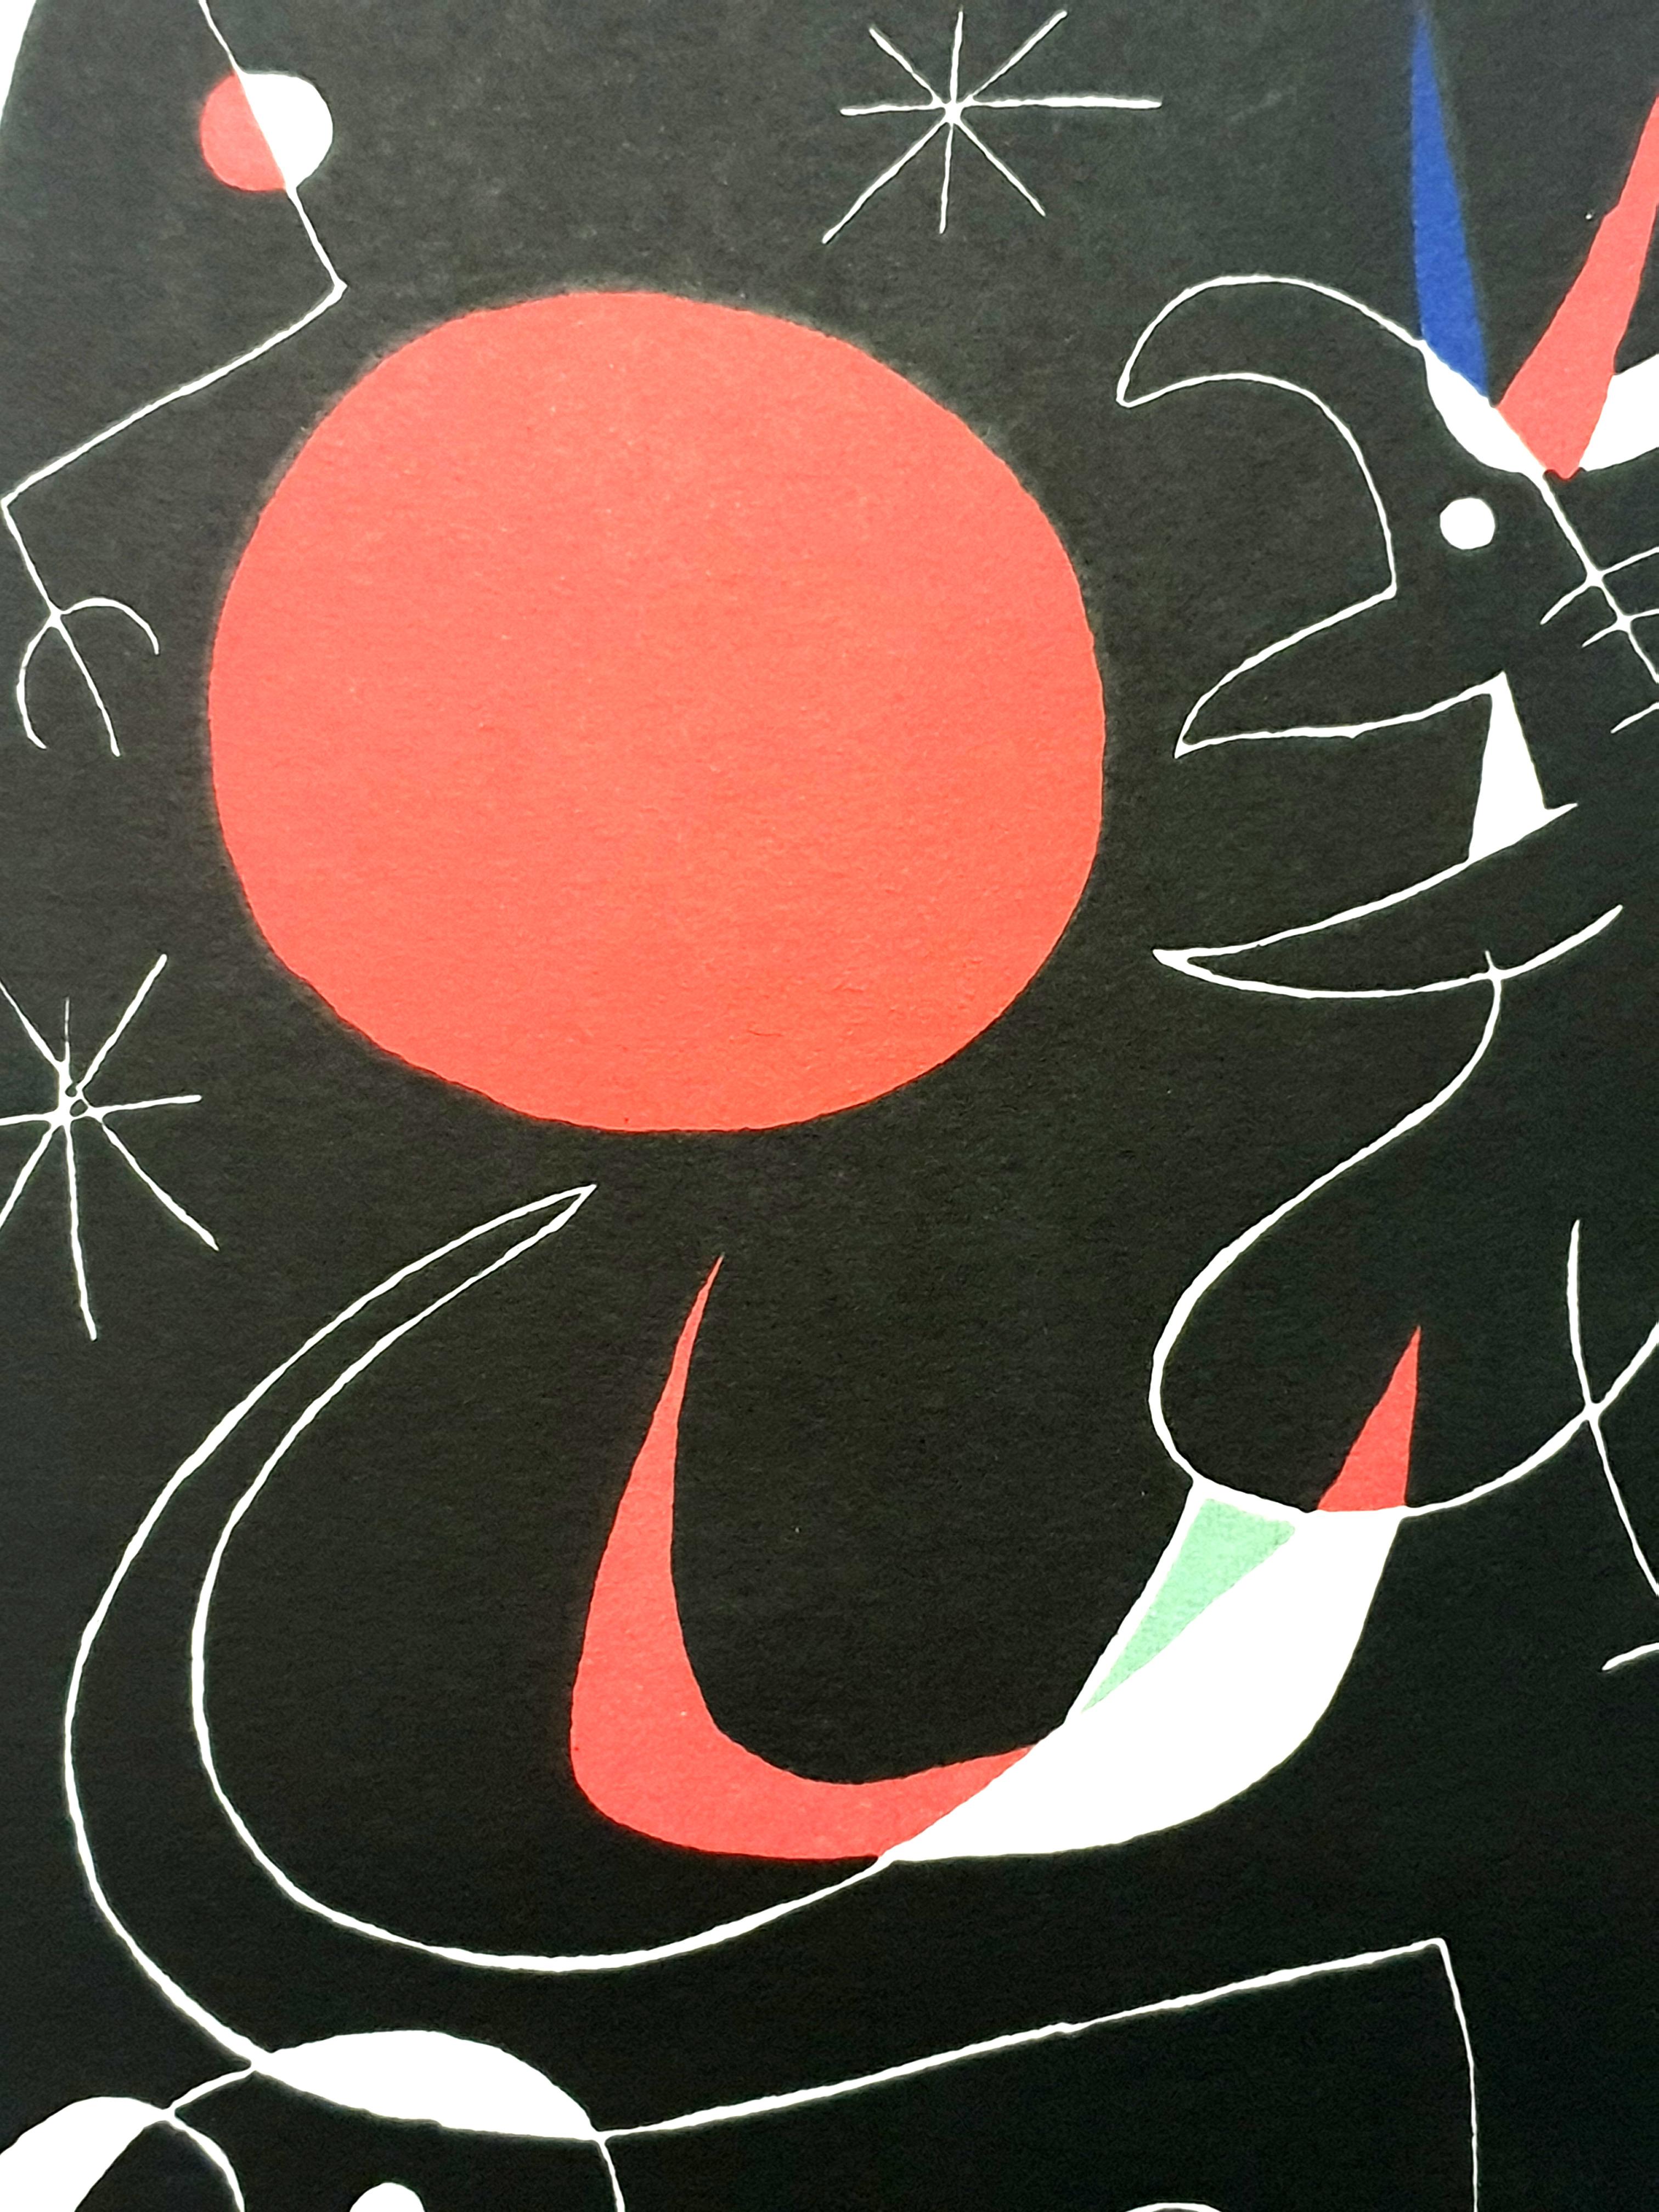 Joan Miro - Night Sky - Original Lithograph
Artist: Joan Miro
Editor: Maeght
Year: 1956
Dimensions: 23 x 20 cm
Reference: Mourlot 235

Biography

Joan Miró i Ferrà  (April 20,1893 – December 25,1983) was a world renowned Spanish Catalan painter,